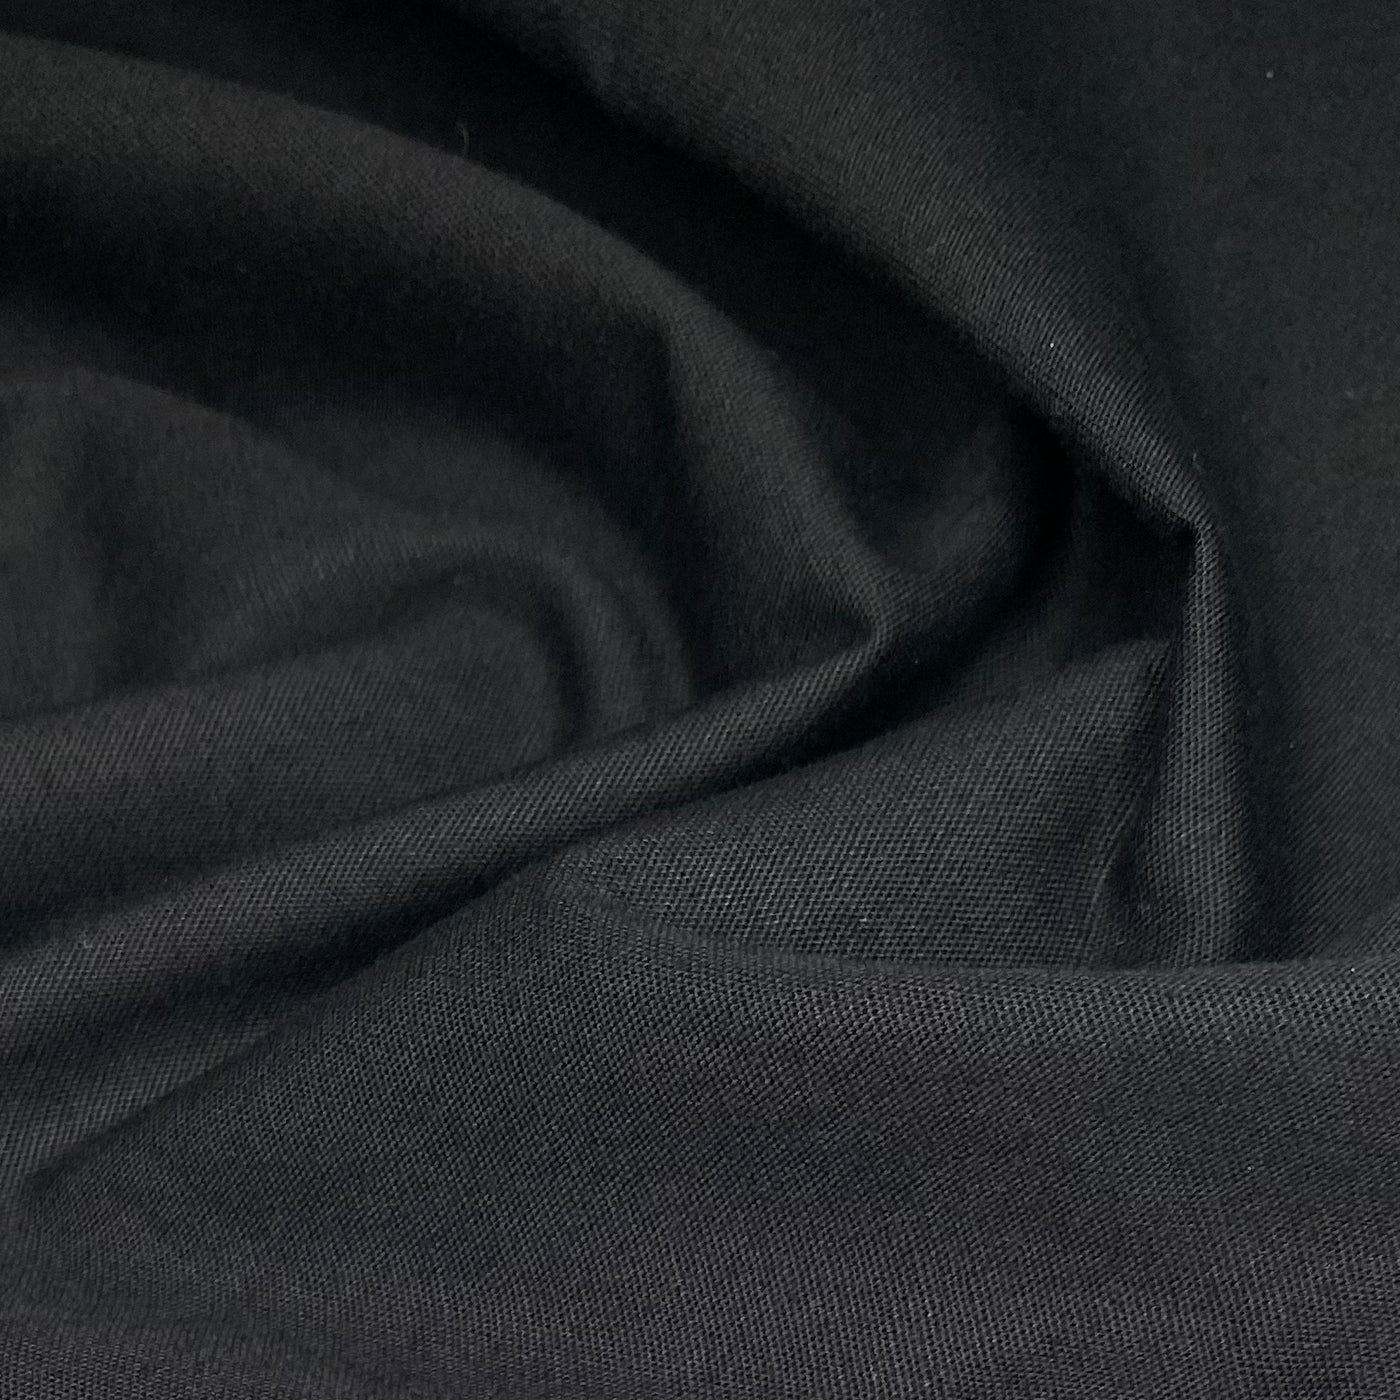 Cotton Broadcloth - 60” - Black